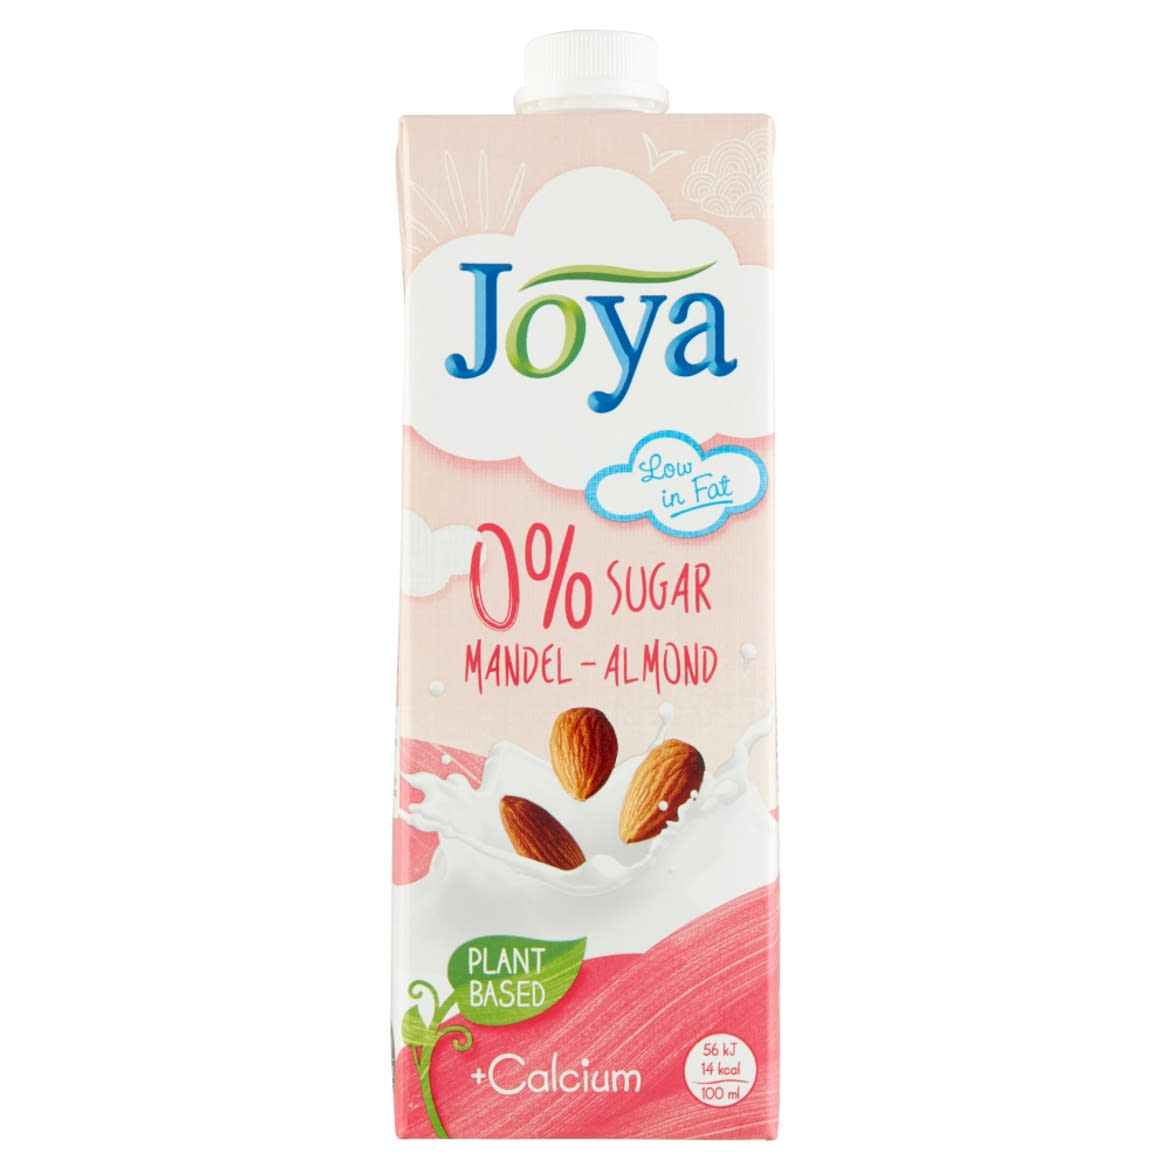 Joya mandulaital kalciummal 0% cukor UHT